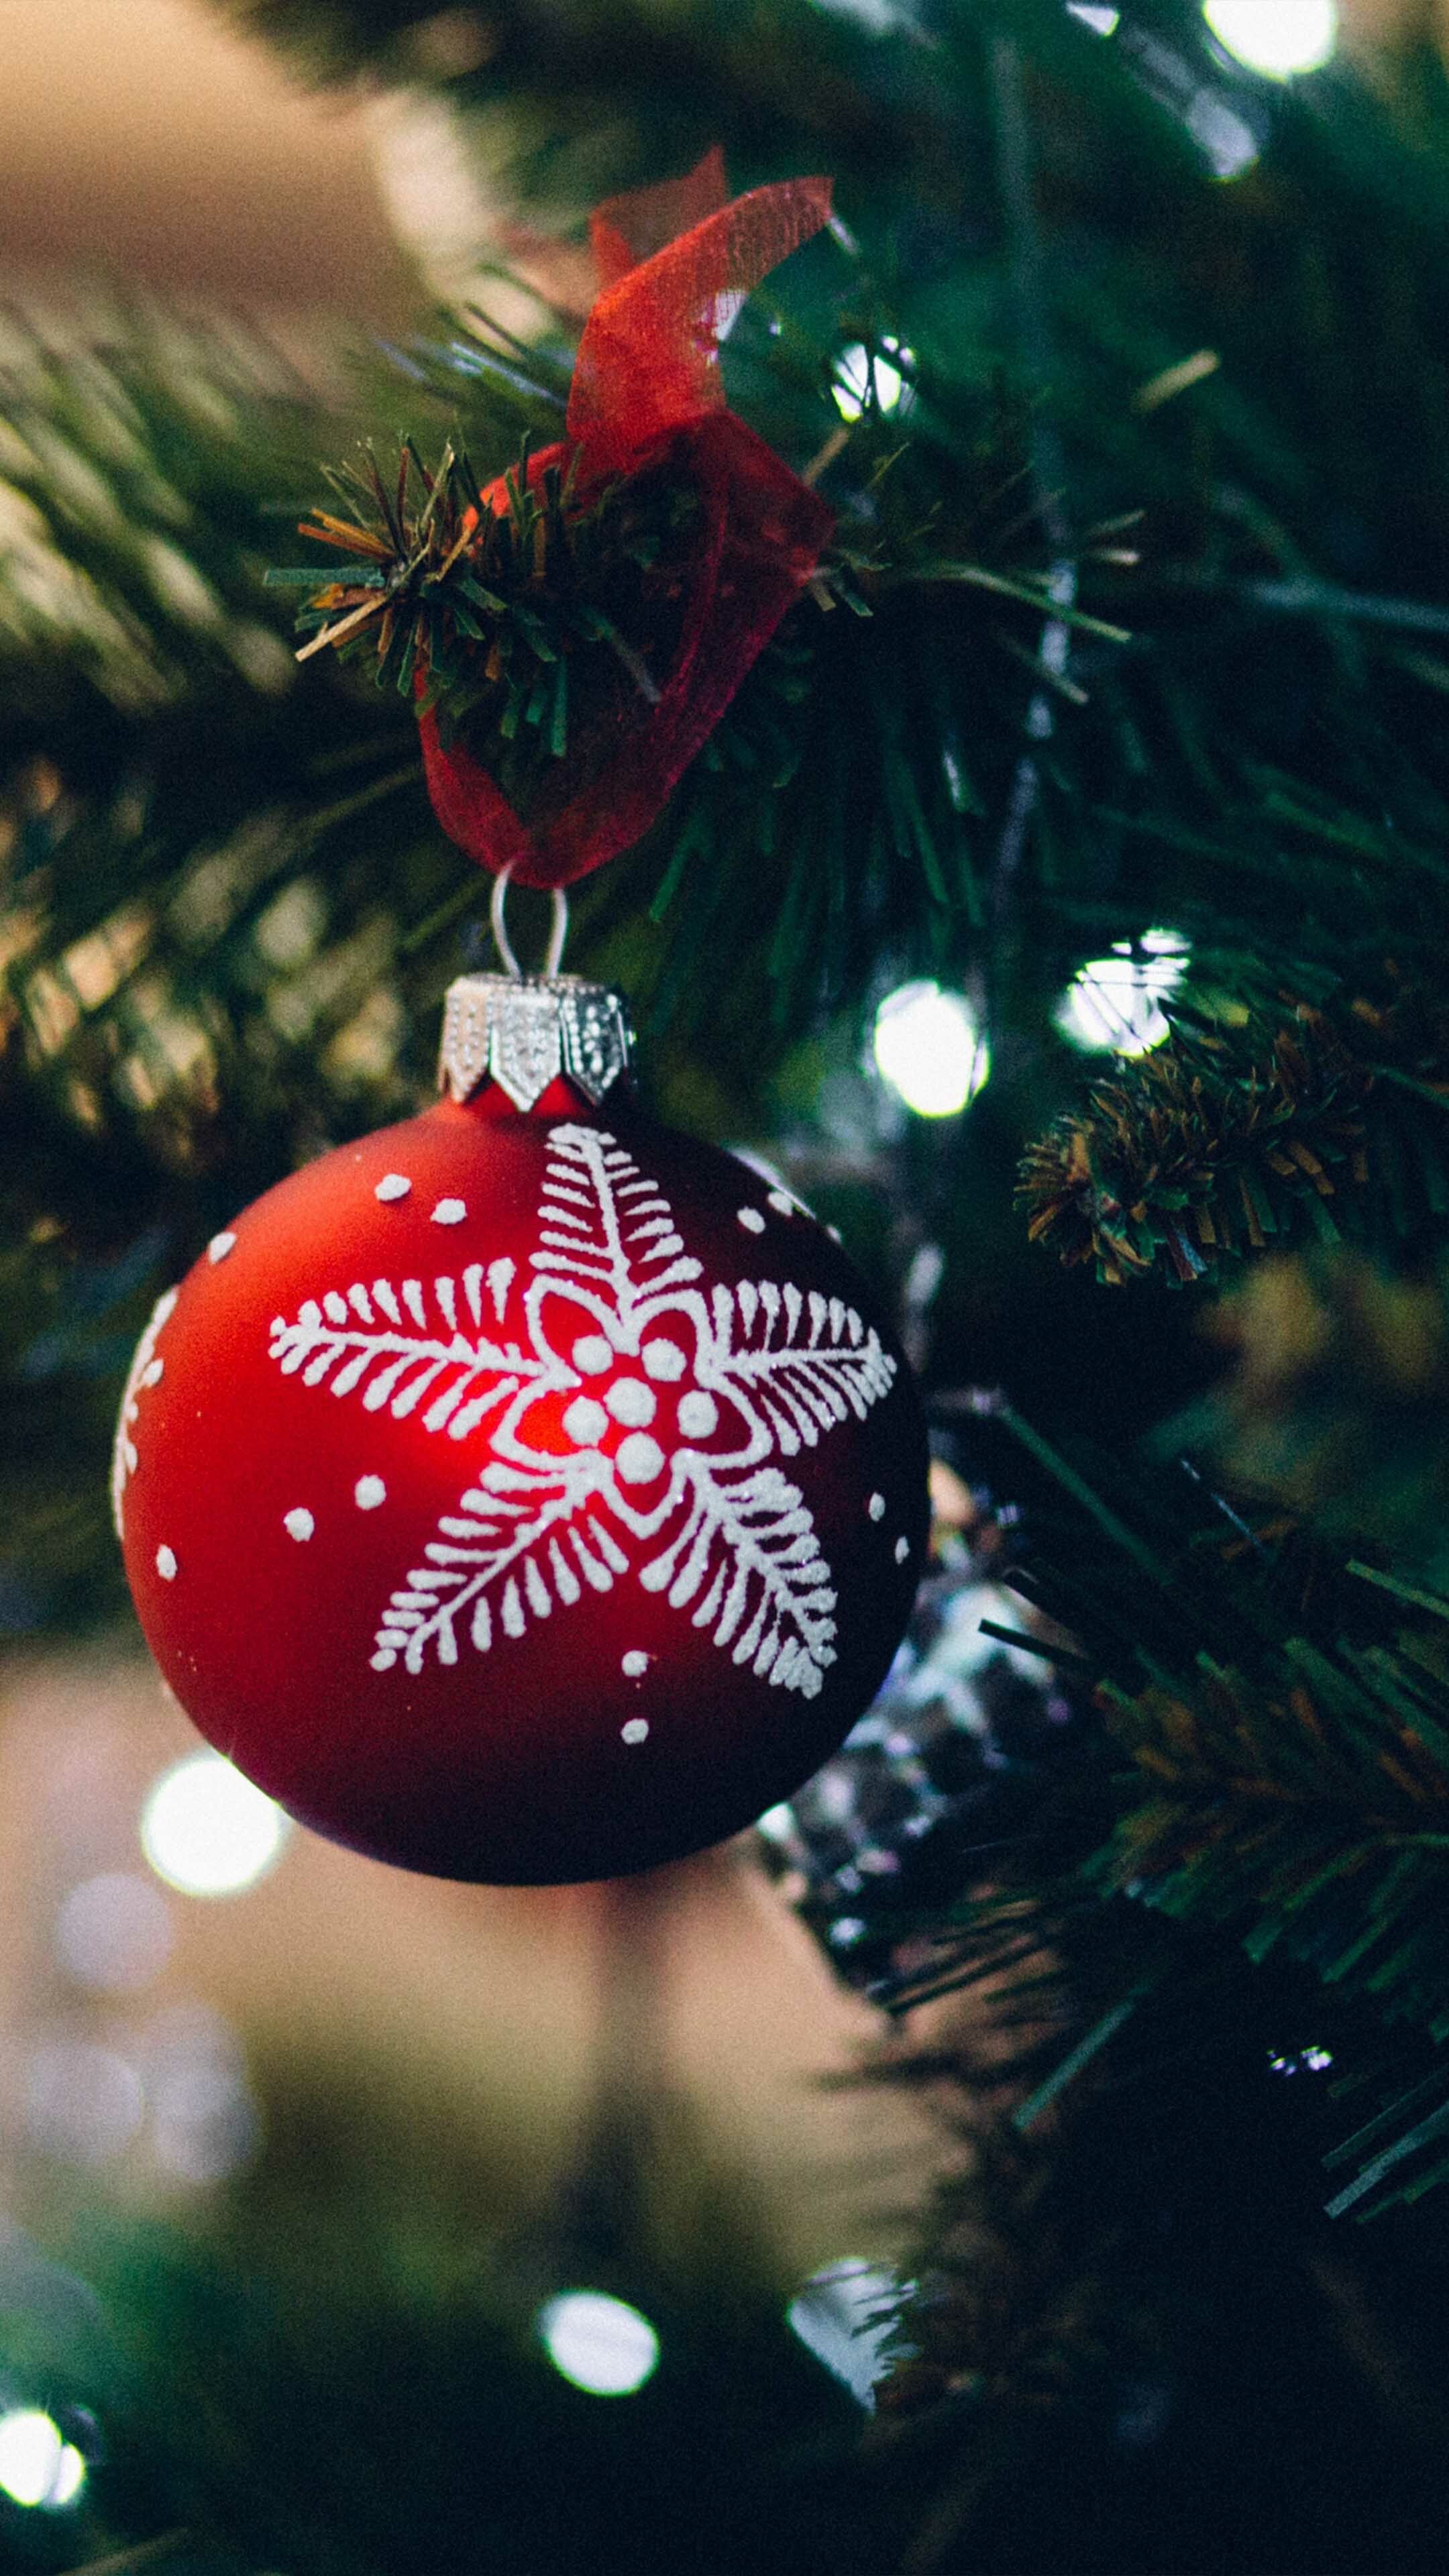 Christmas Ornament: Festive, Xmas tree and baubles. 2160x3840 4K Wallpaper.